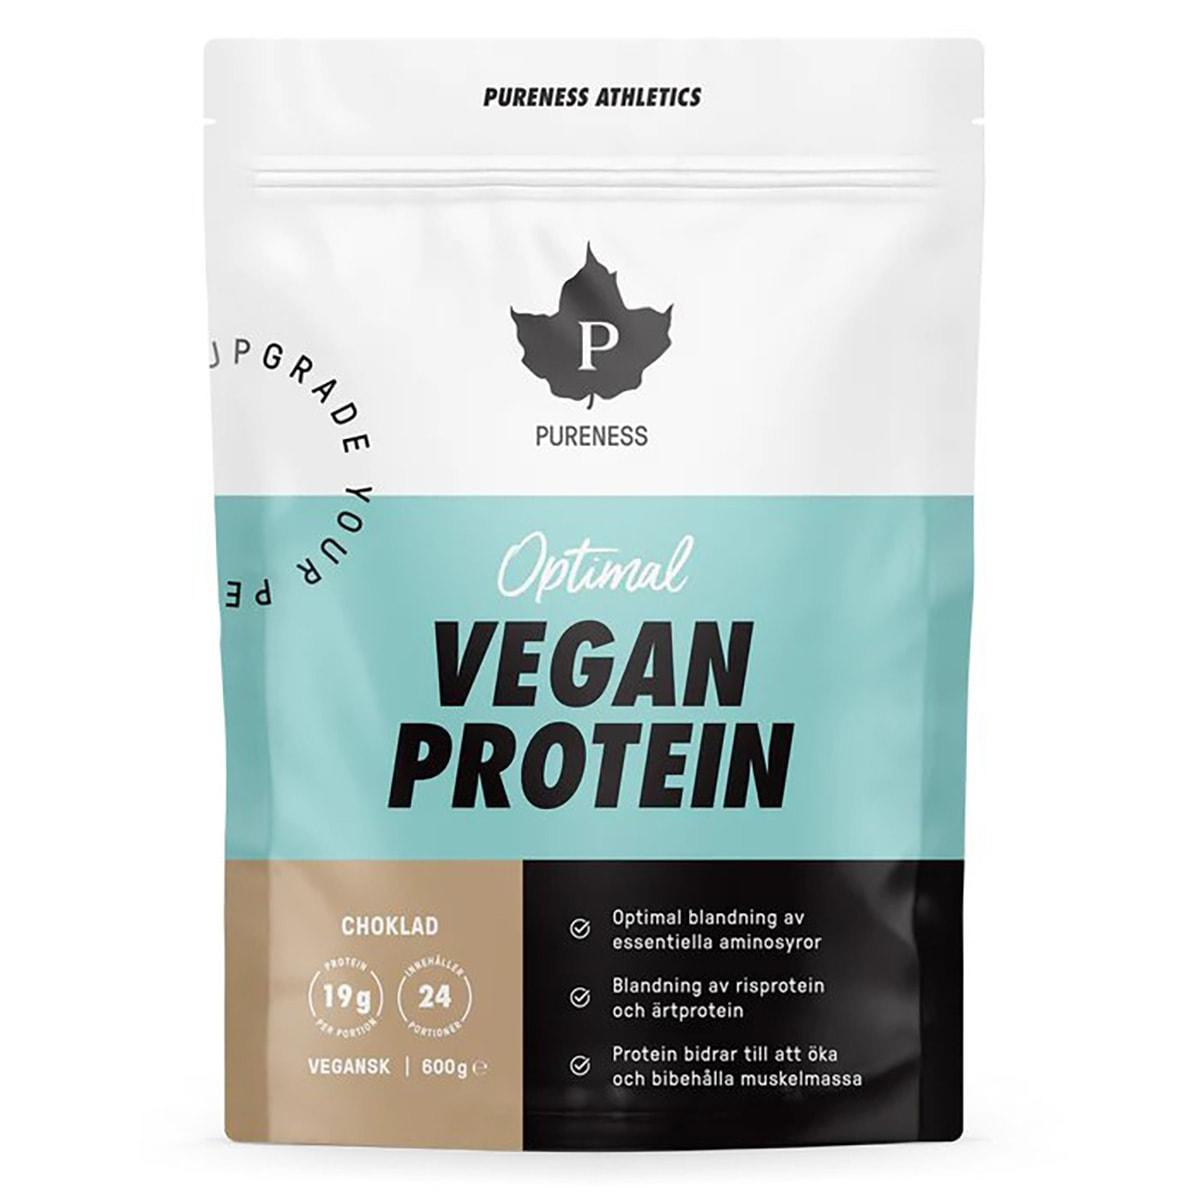 Pureness Vegan Protein 600g Proteinpulver